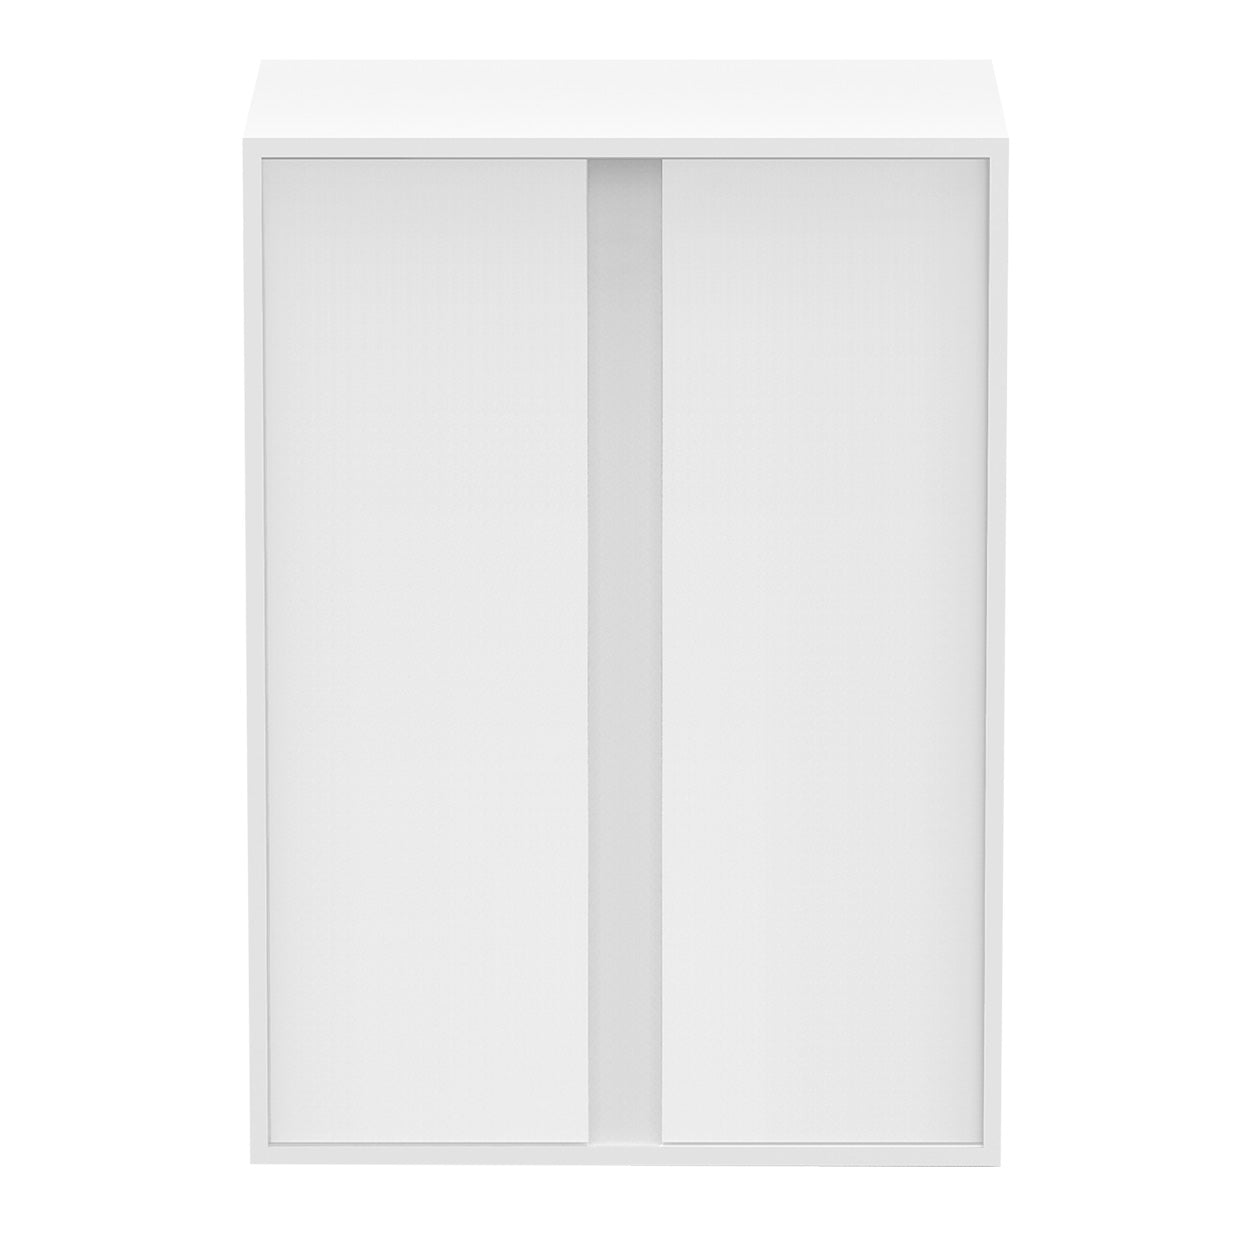 Aquatlantis Elegance Expert Stand - White - 24 x 12 | The Fish Room